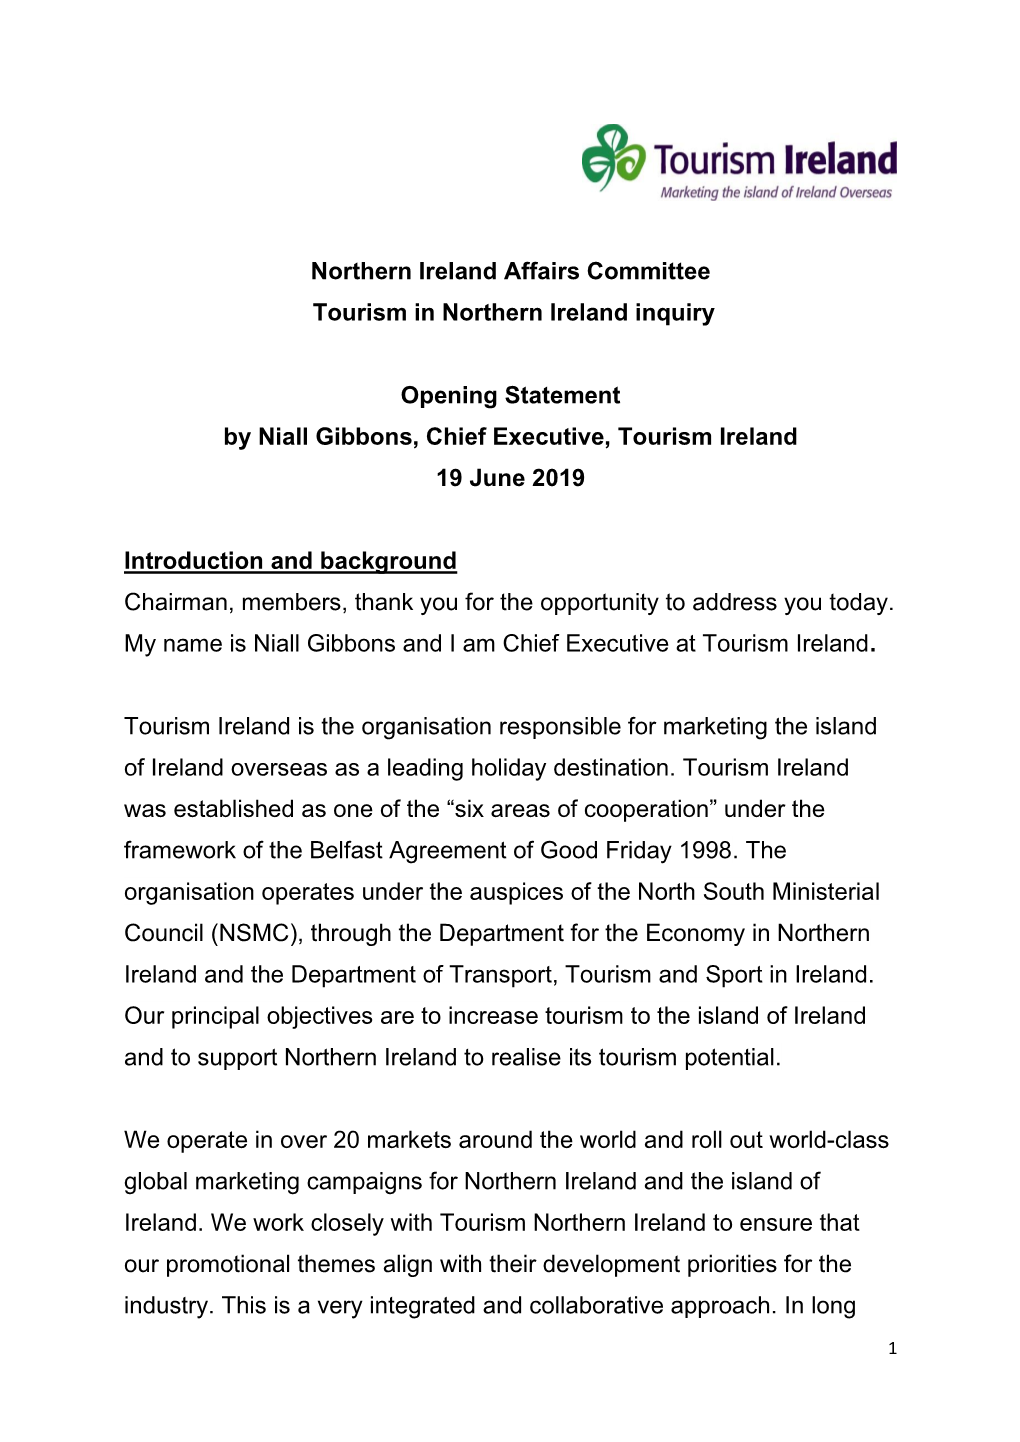 Statement to Northern Ireland Affairs Committee, June